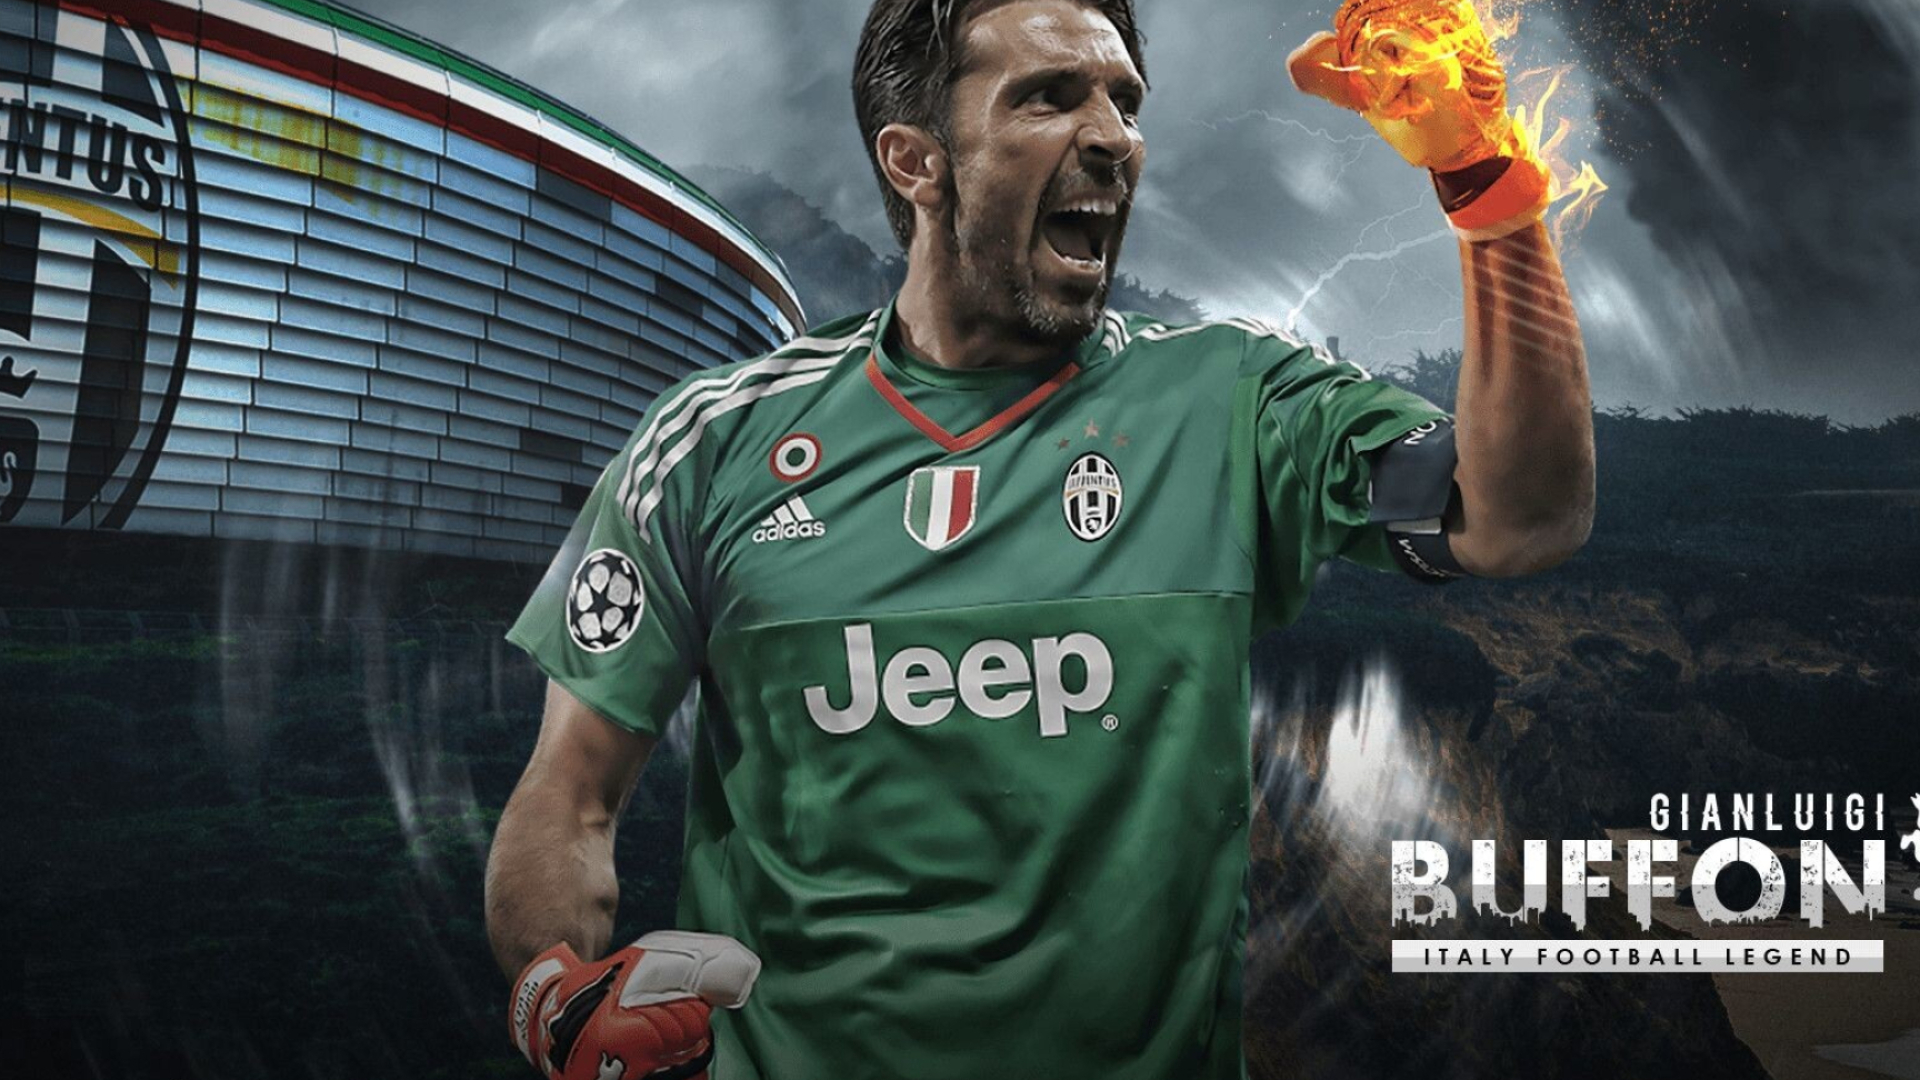 Gianluigi Buffon: Gigi, Italy Football Legend, Juventus FC, Allianz Stadium, Turin, Football gear. 1920x1080 Full HD Wallpaper.